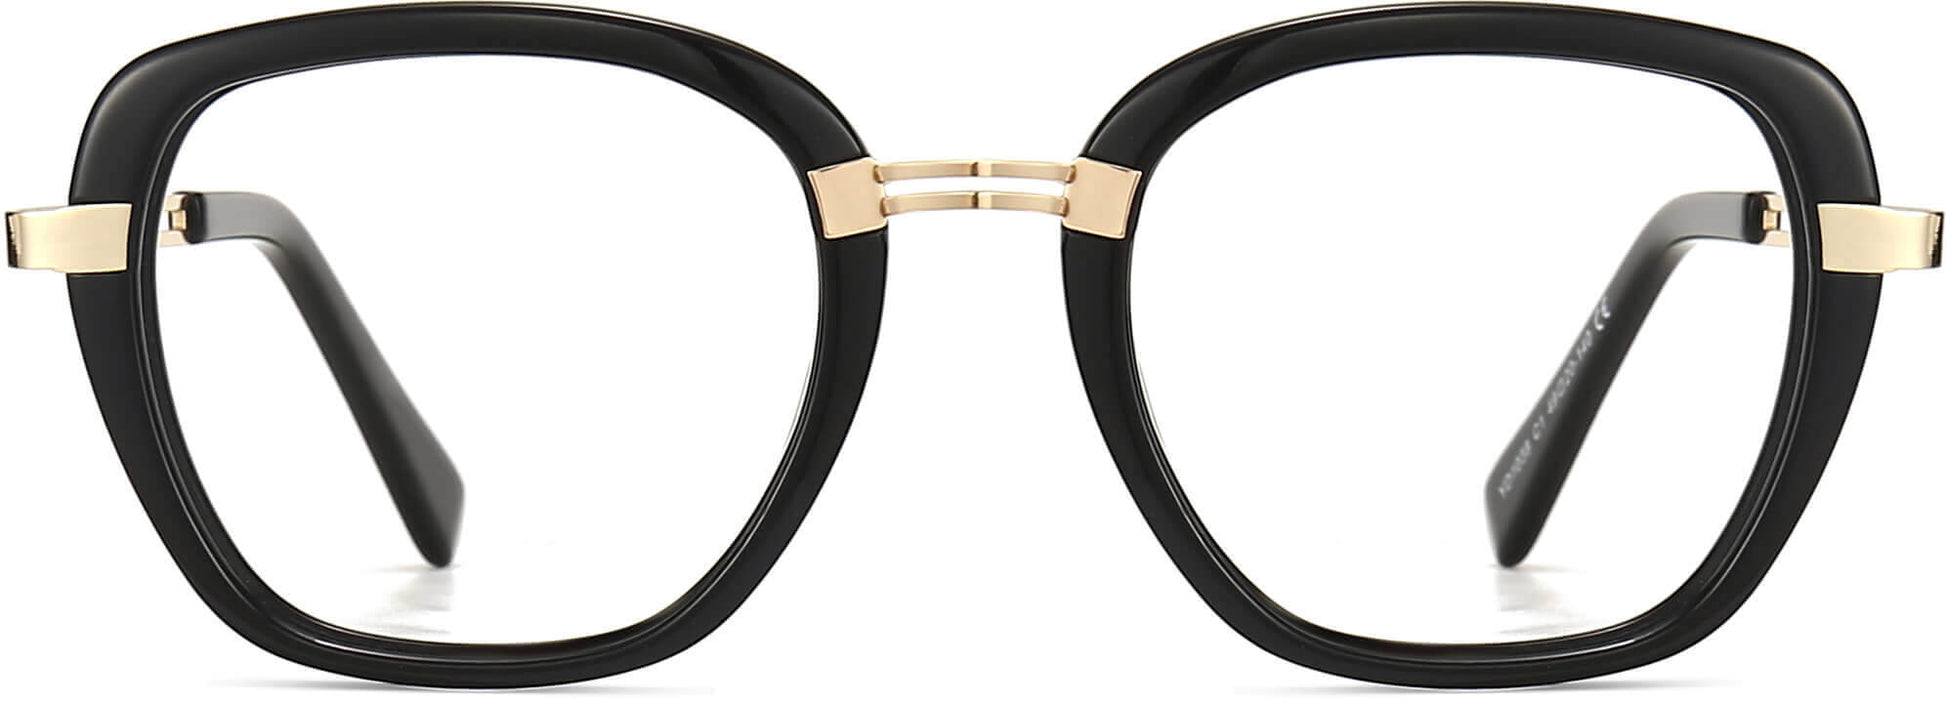 Myla Cateye Black Eyeglasses from ANRRI, front view